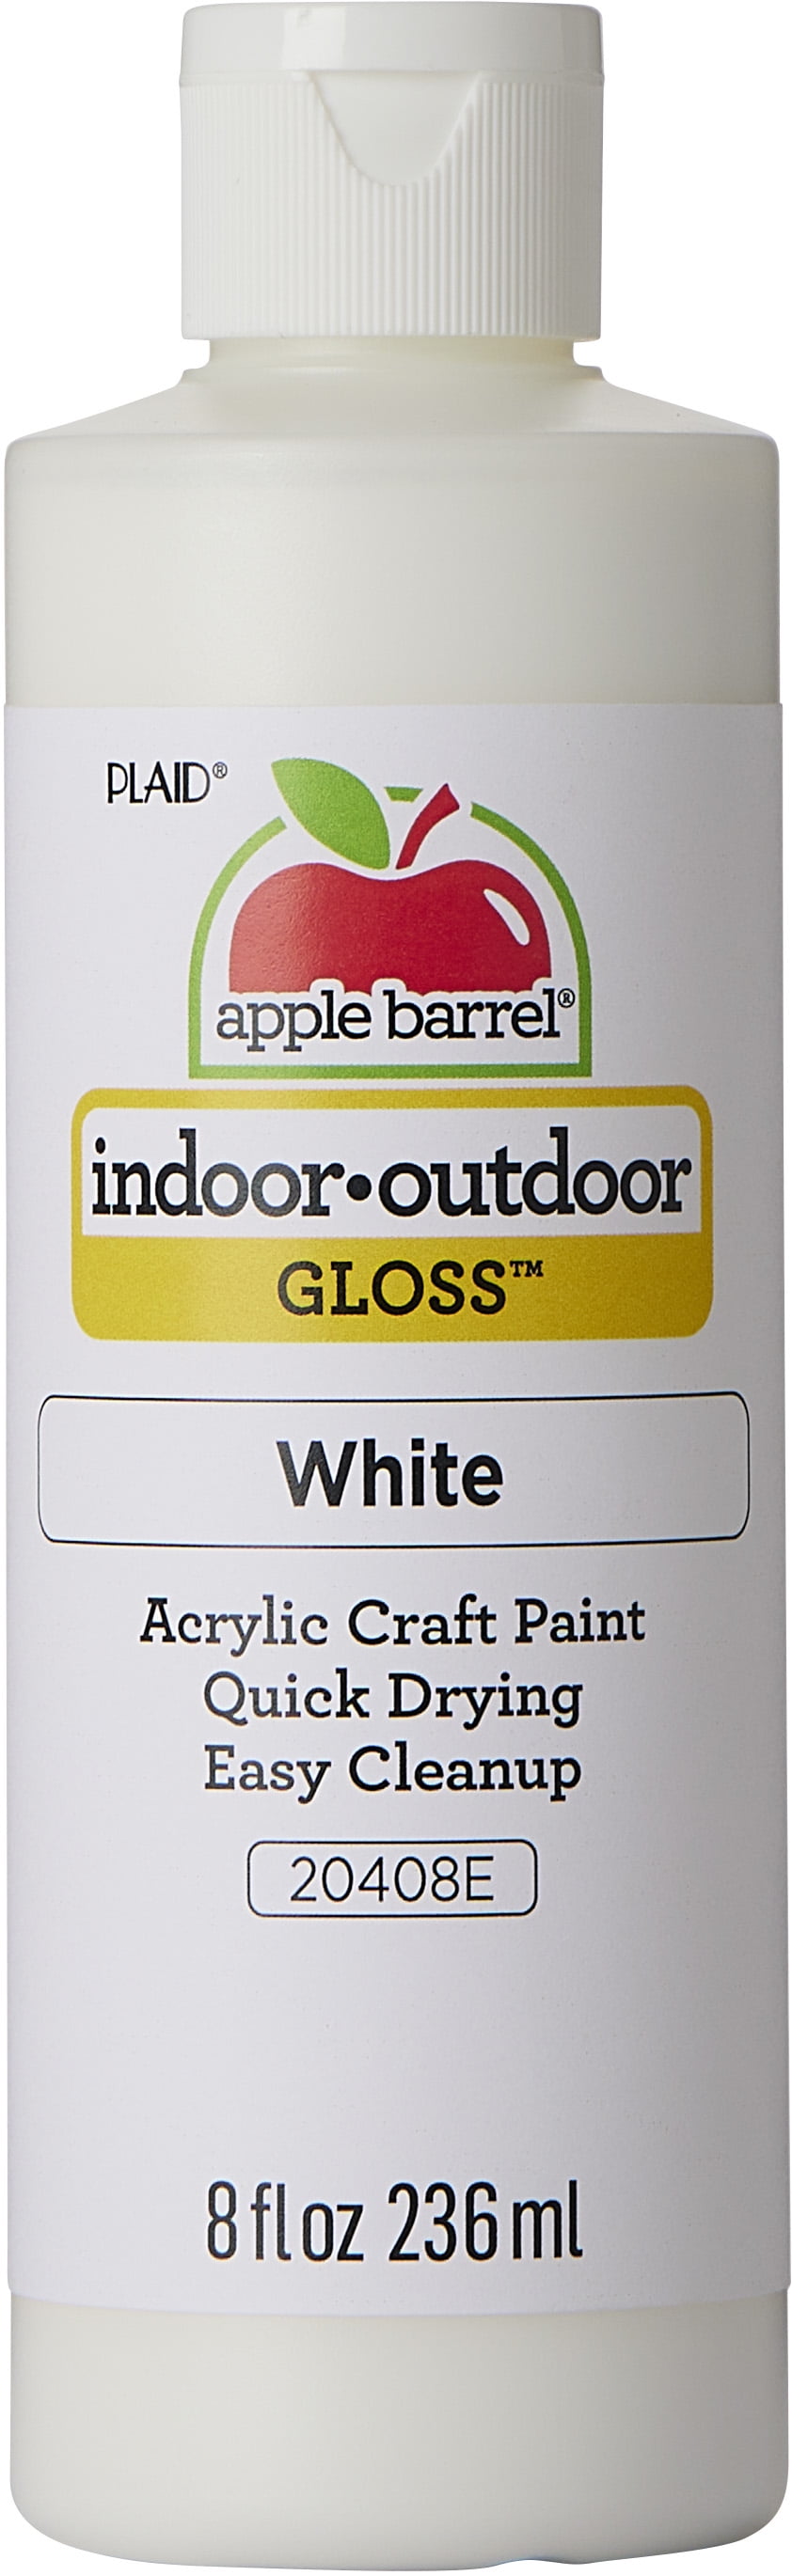 Apple Barrel Acrylic Craft Paint, Gloss Finish, White, 8 fl oz